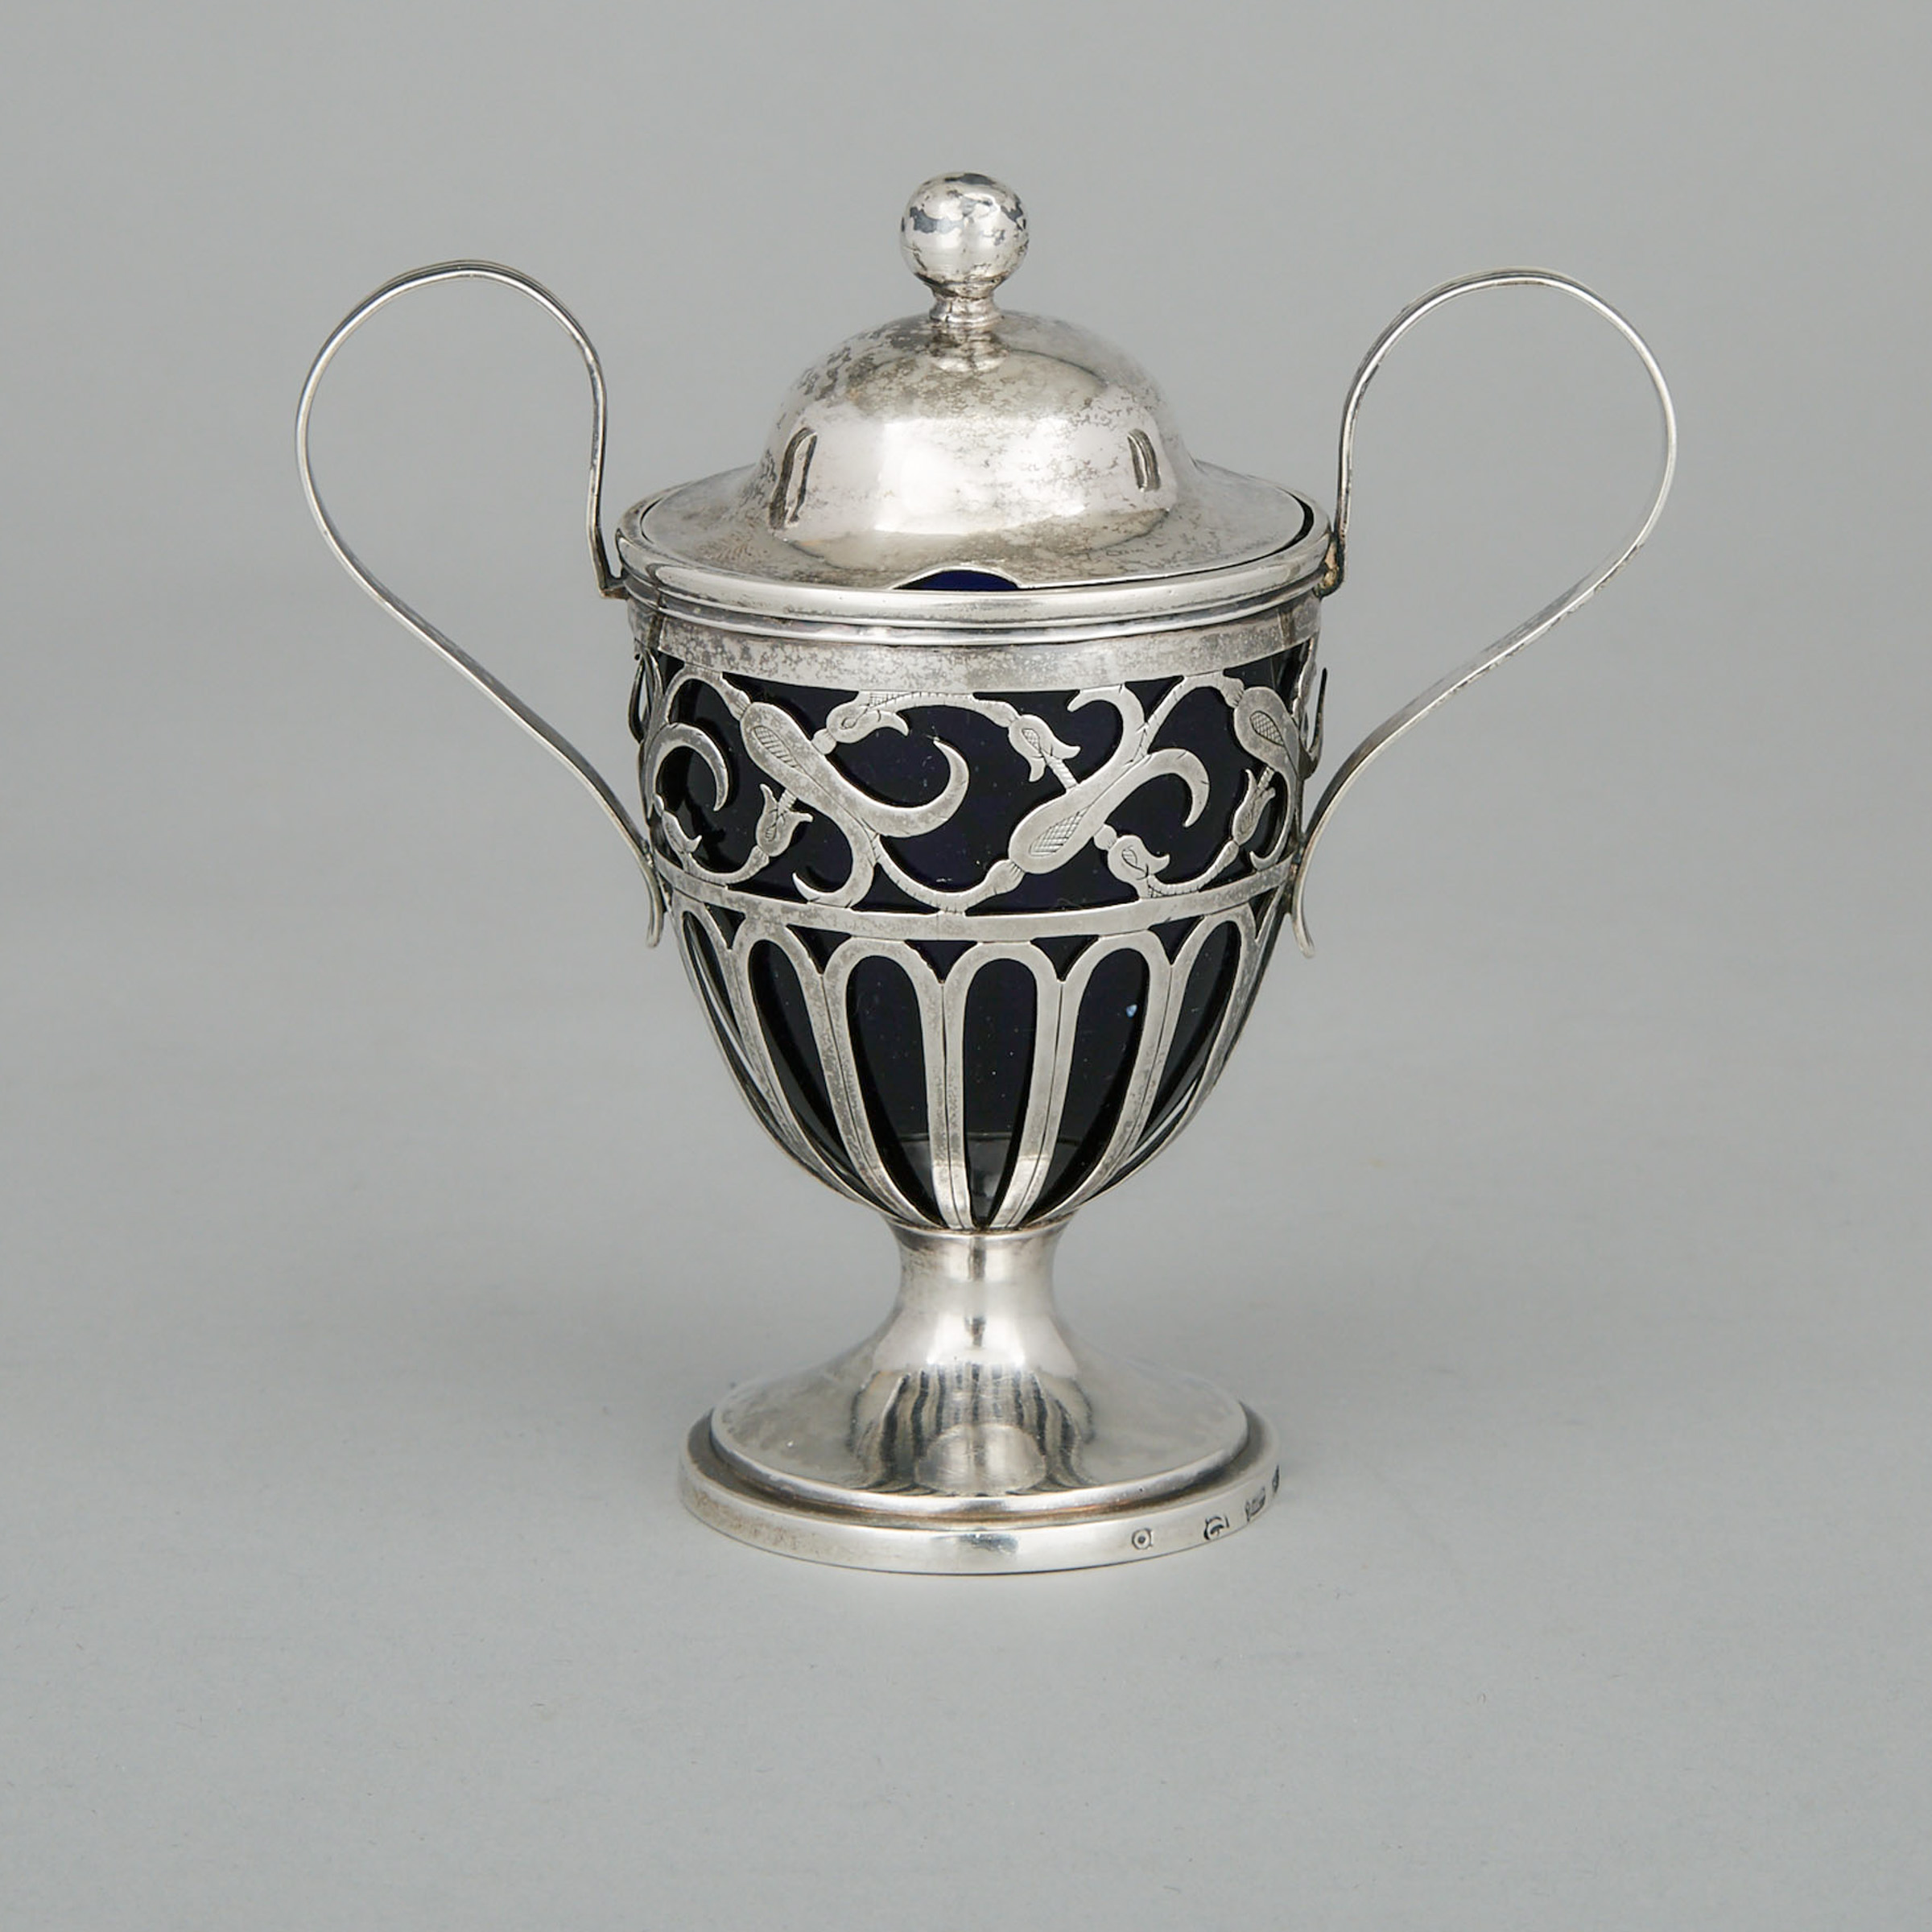 Dutch Silver Pierced Mustard Pot, late 18th century